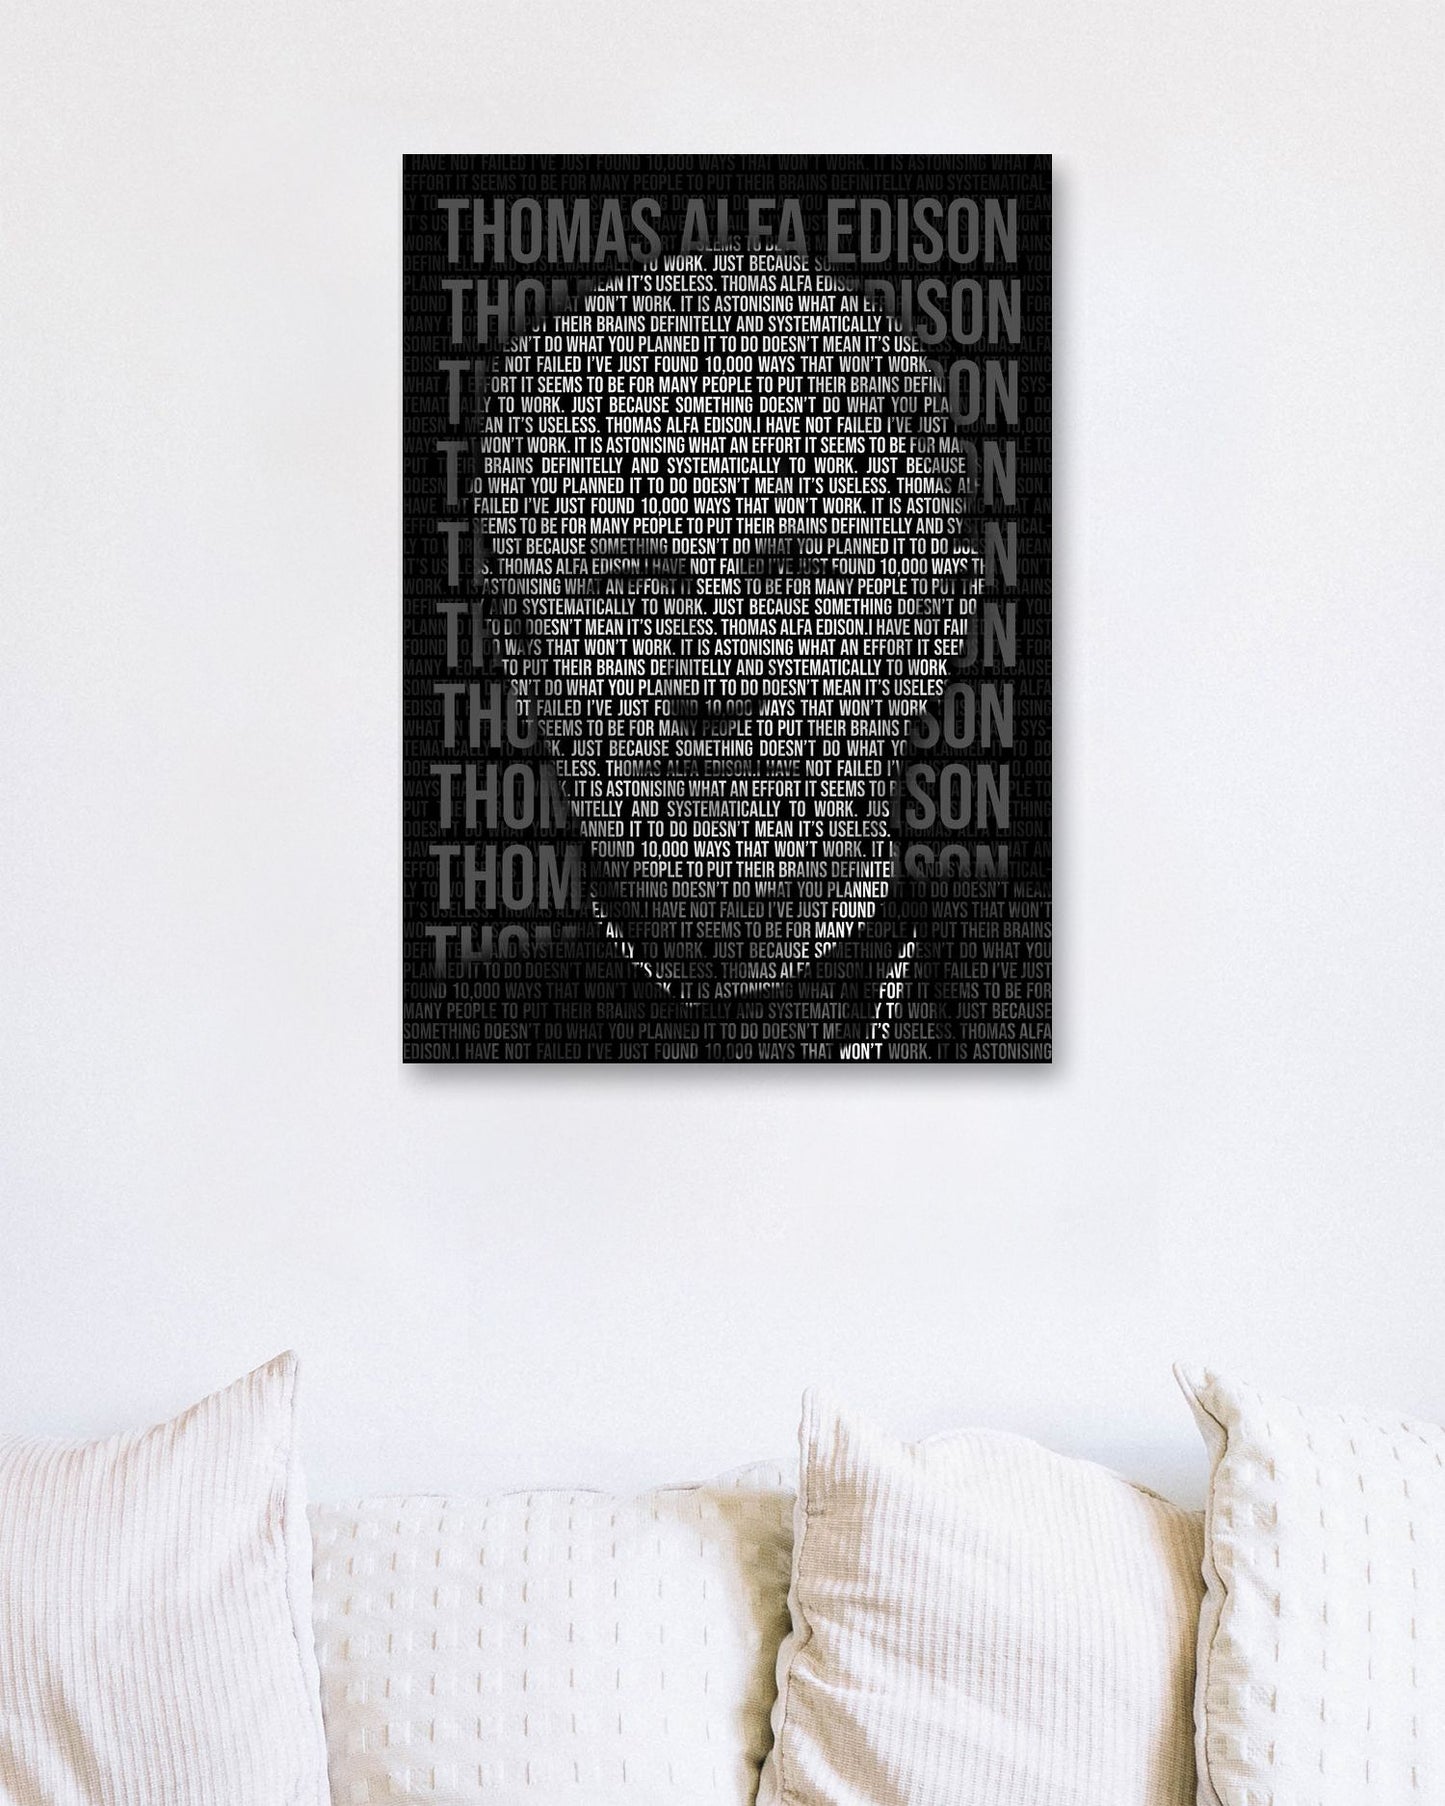 Thomas Alva Edison Typography Quotes - @mamazuka